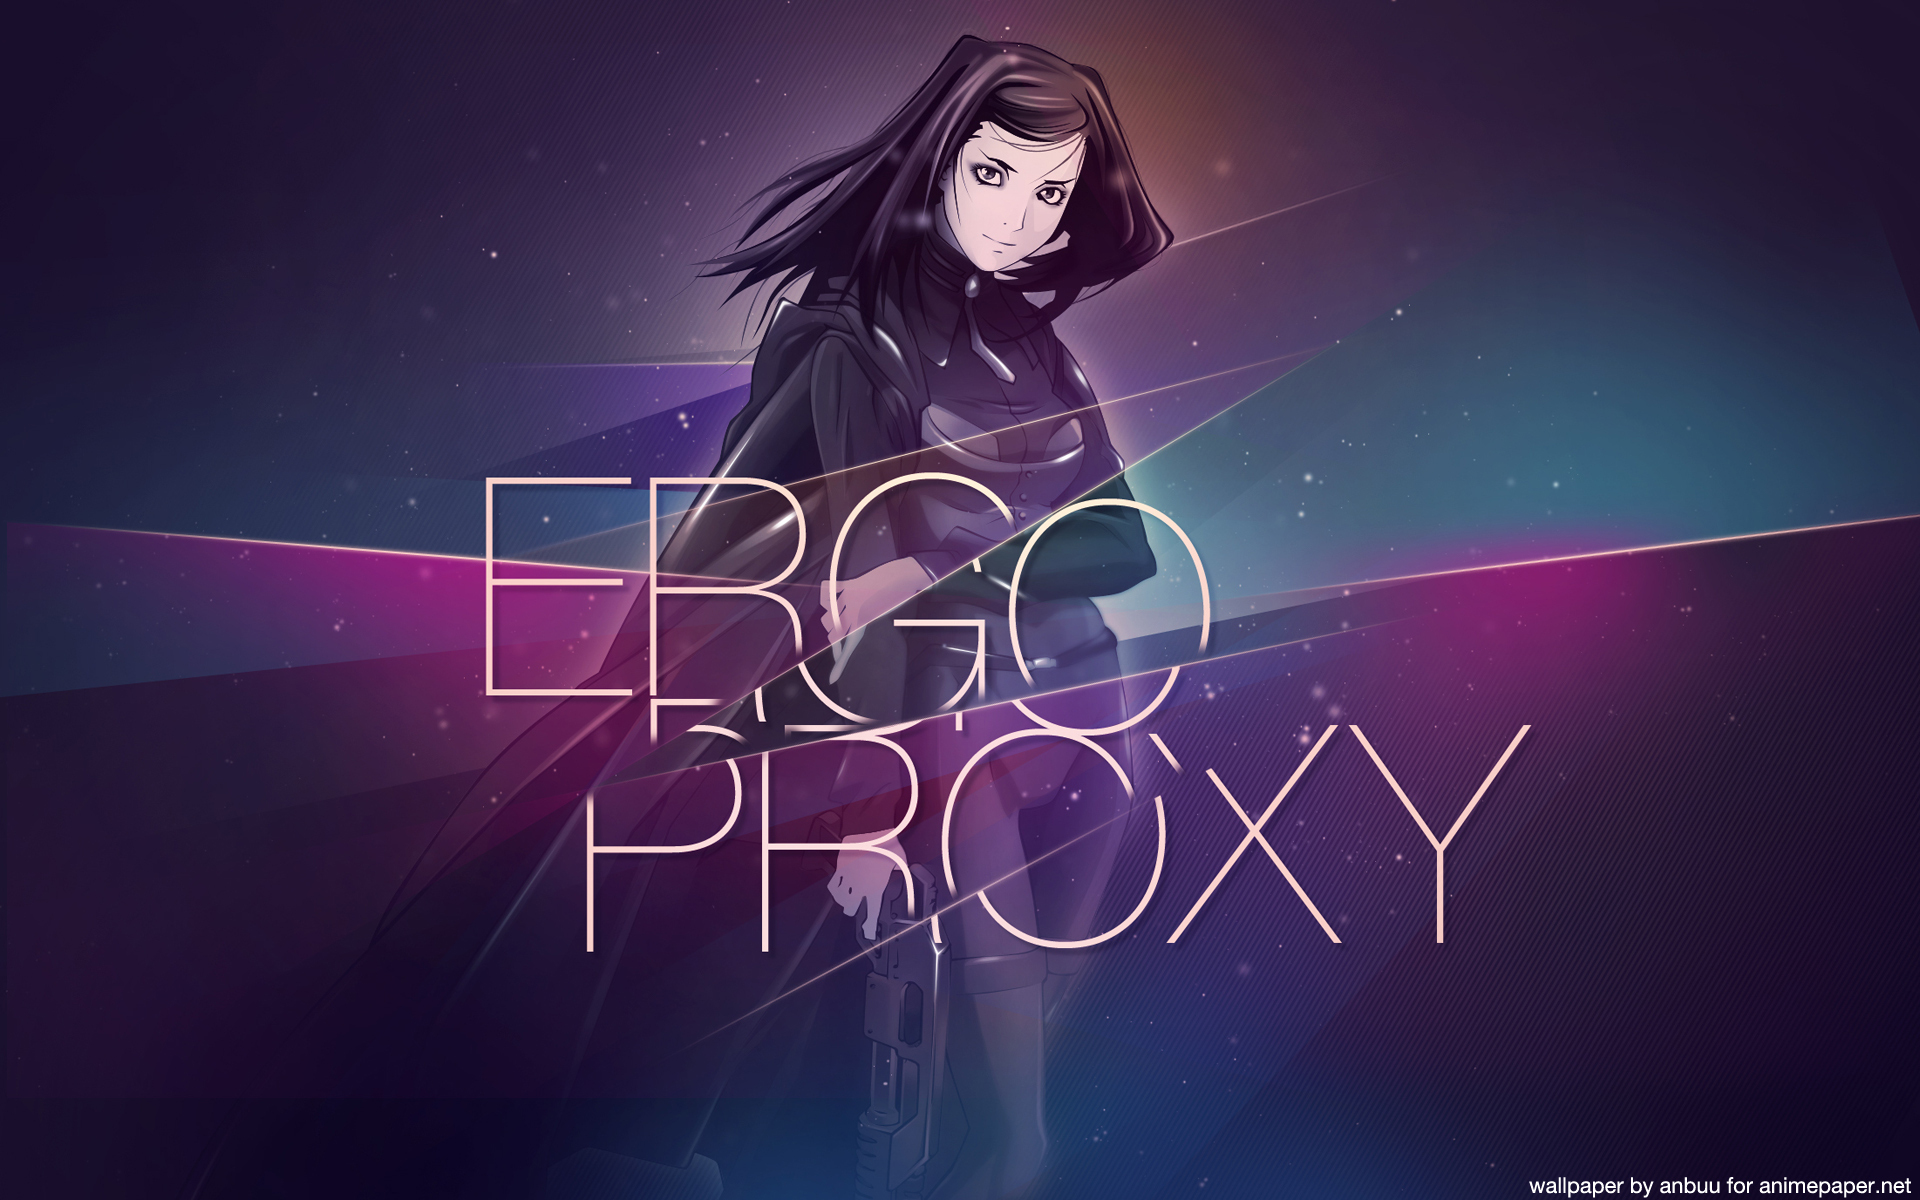 ergo proxy - Other & Anime Background Wallpapers on Desktop Nexus